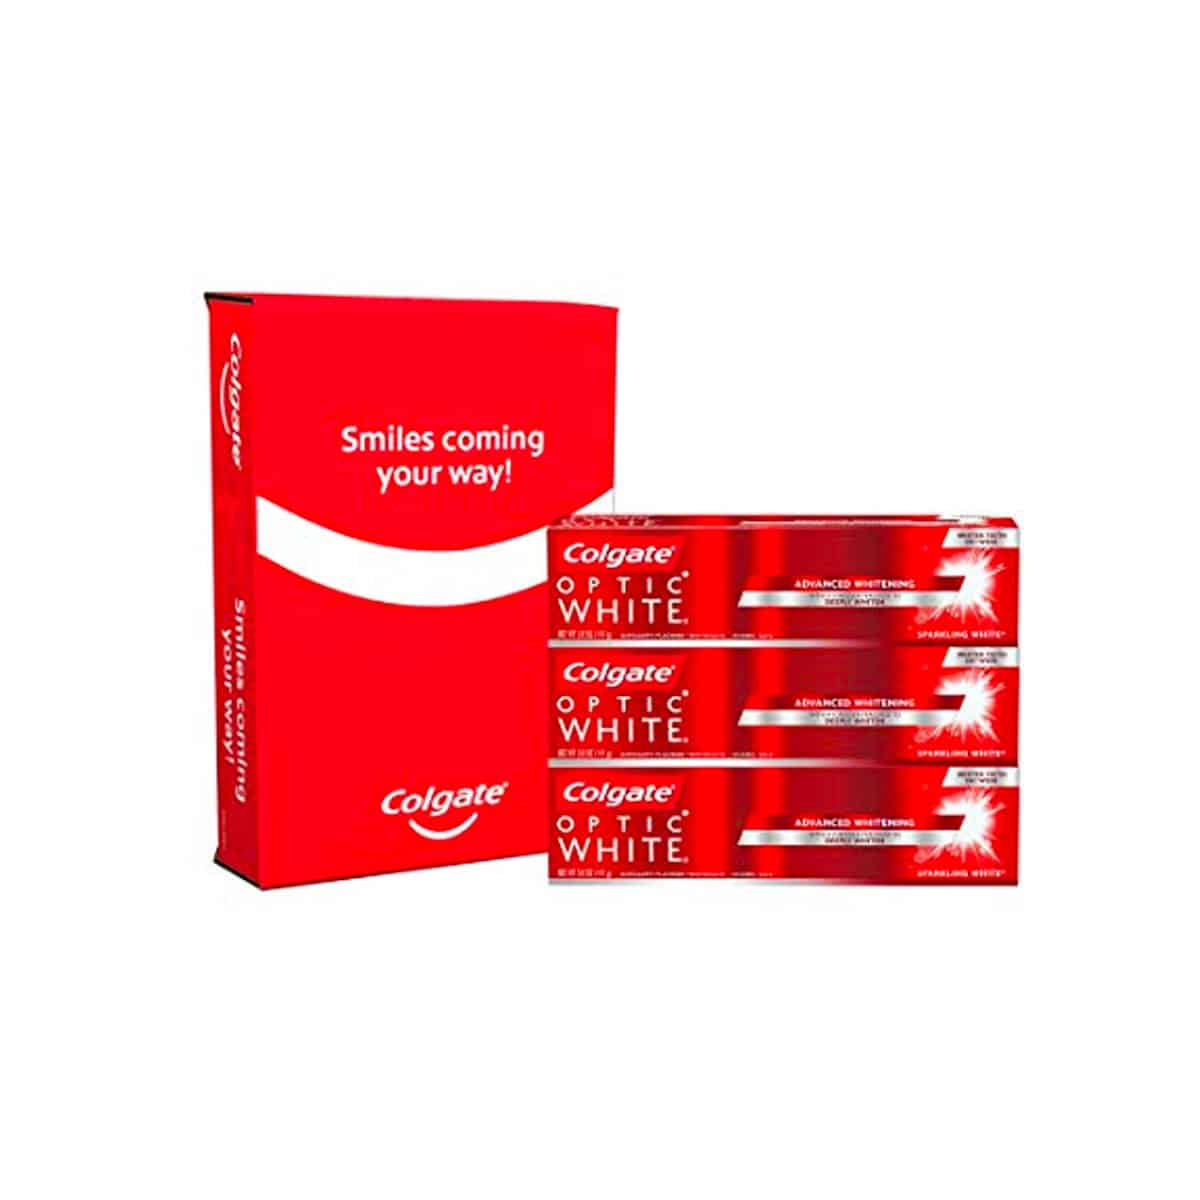 Colgate Optic White Whitening Toothpaste – Sparkling White (3 Pack)